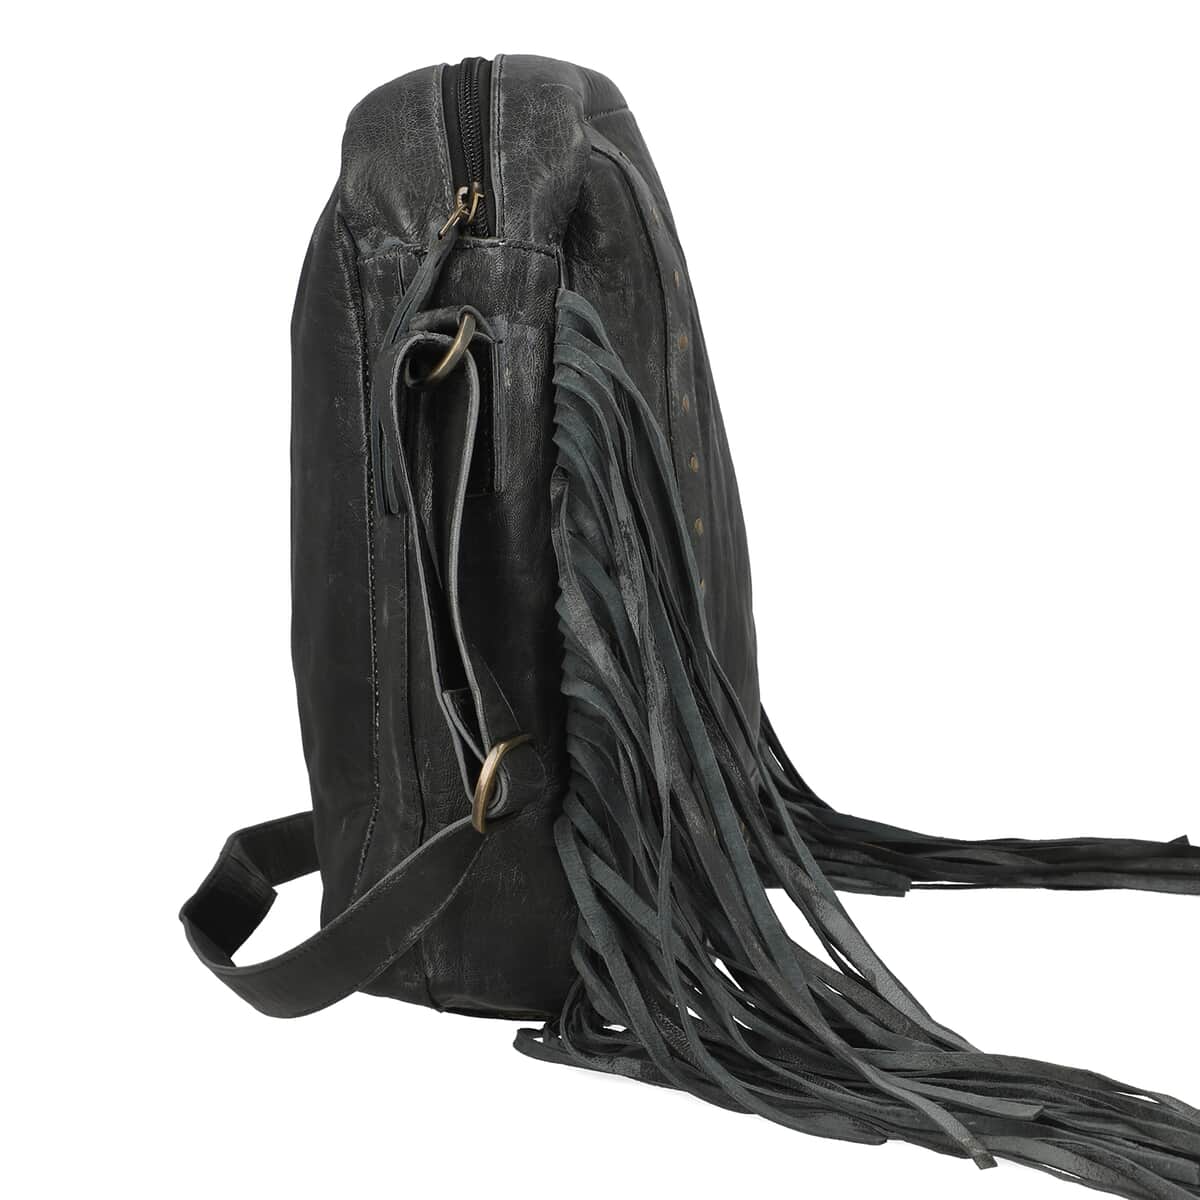 "100% Genuine Leather Shoulder Bag with Fringes SIZE: 13(L)x4(W)x11.5(H) inches COLOR: Black" image number 3